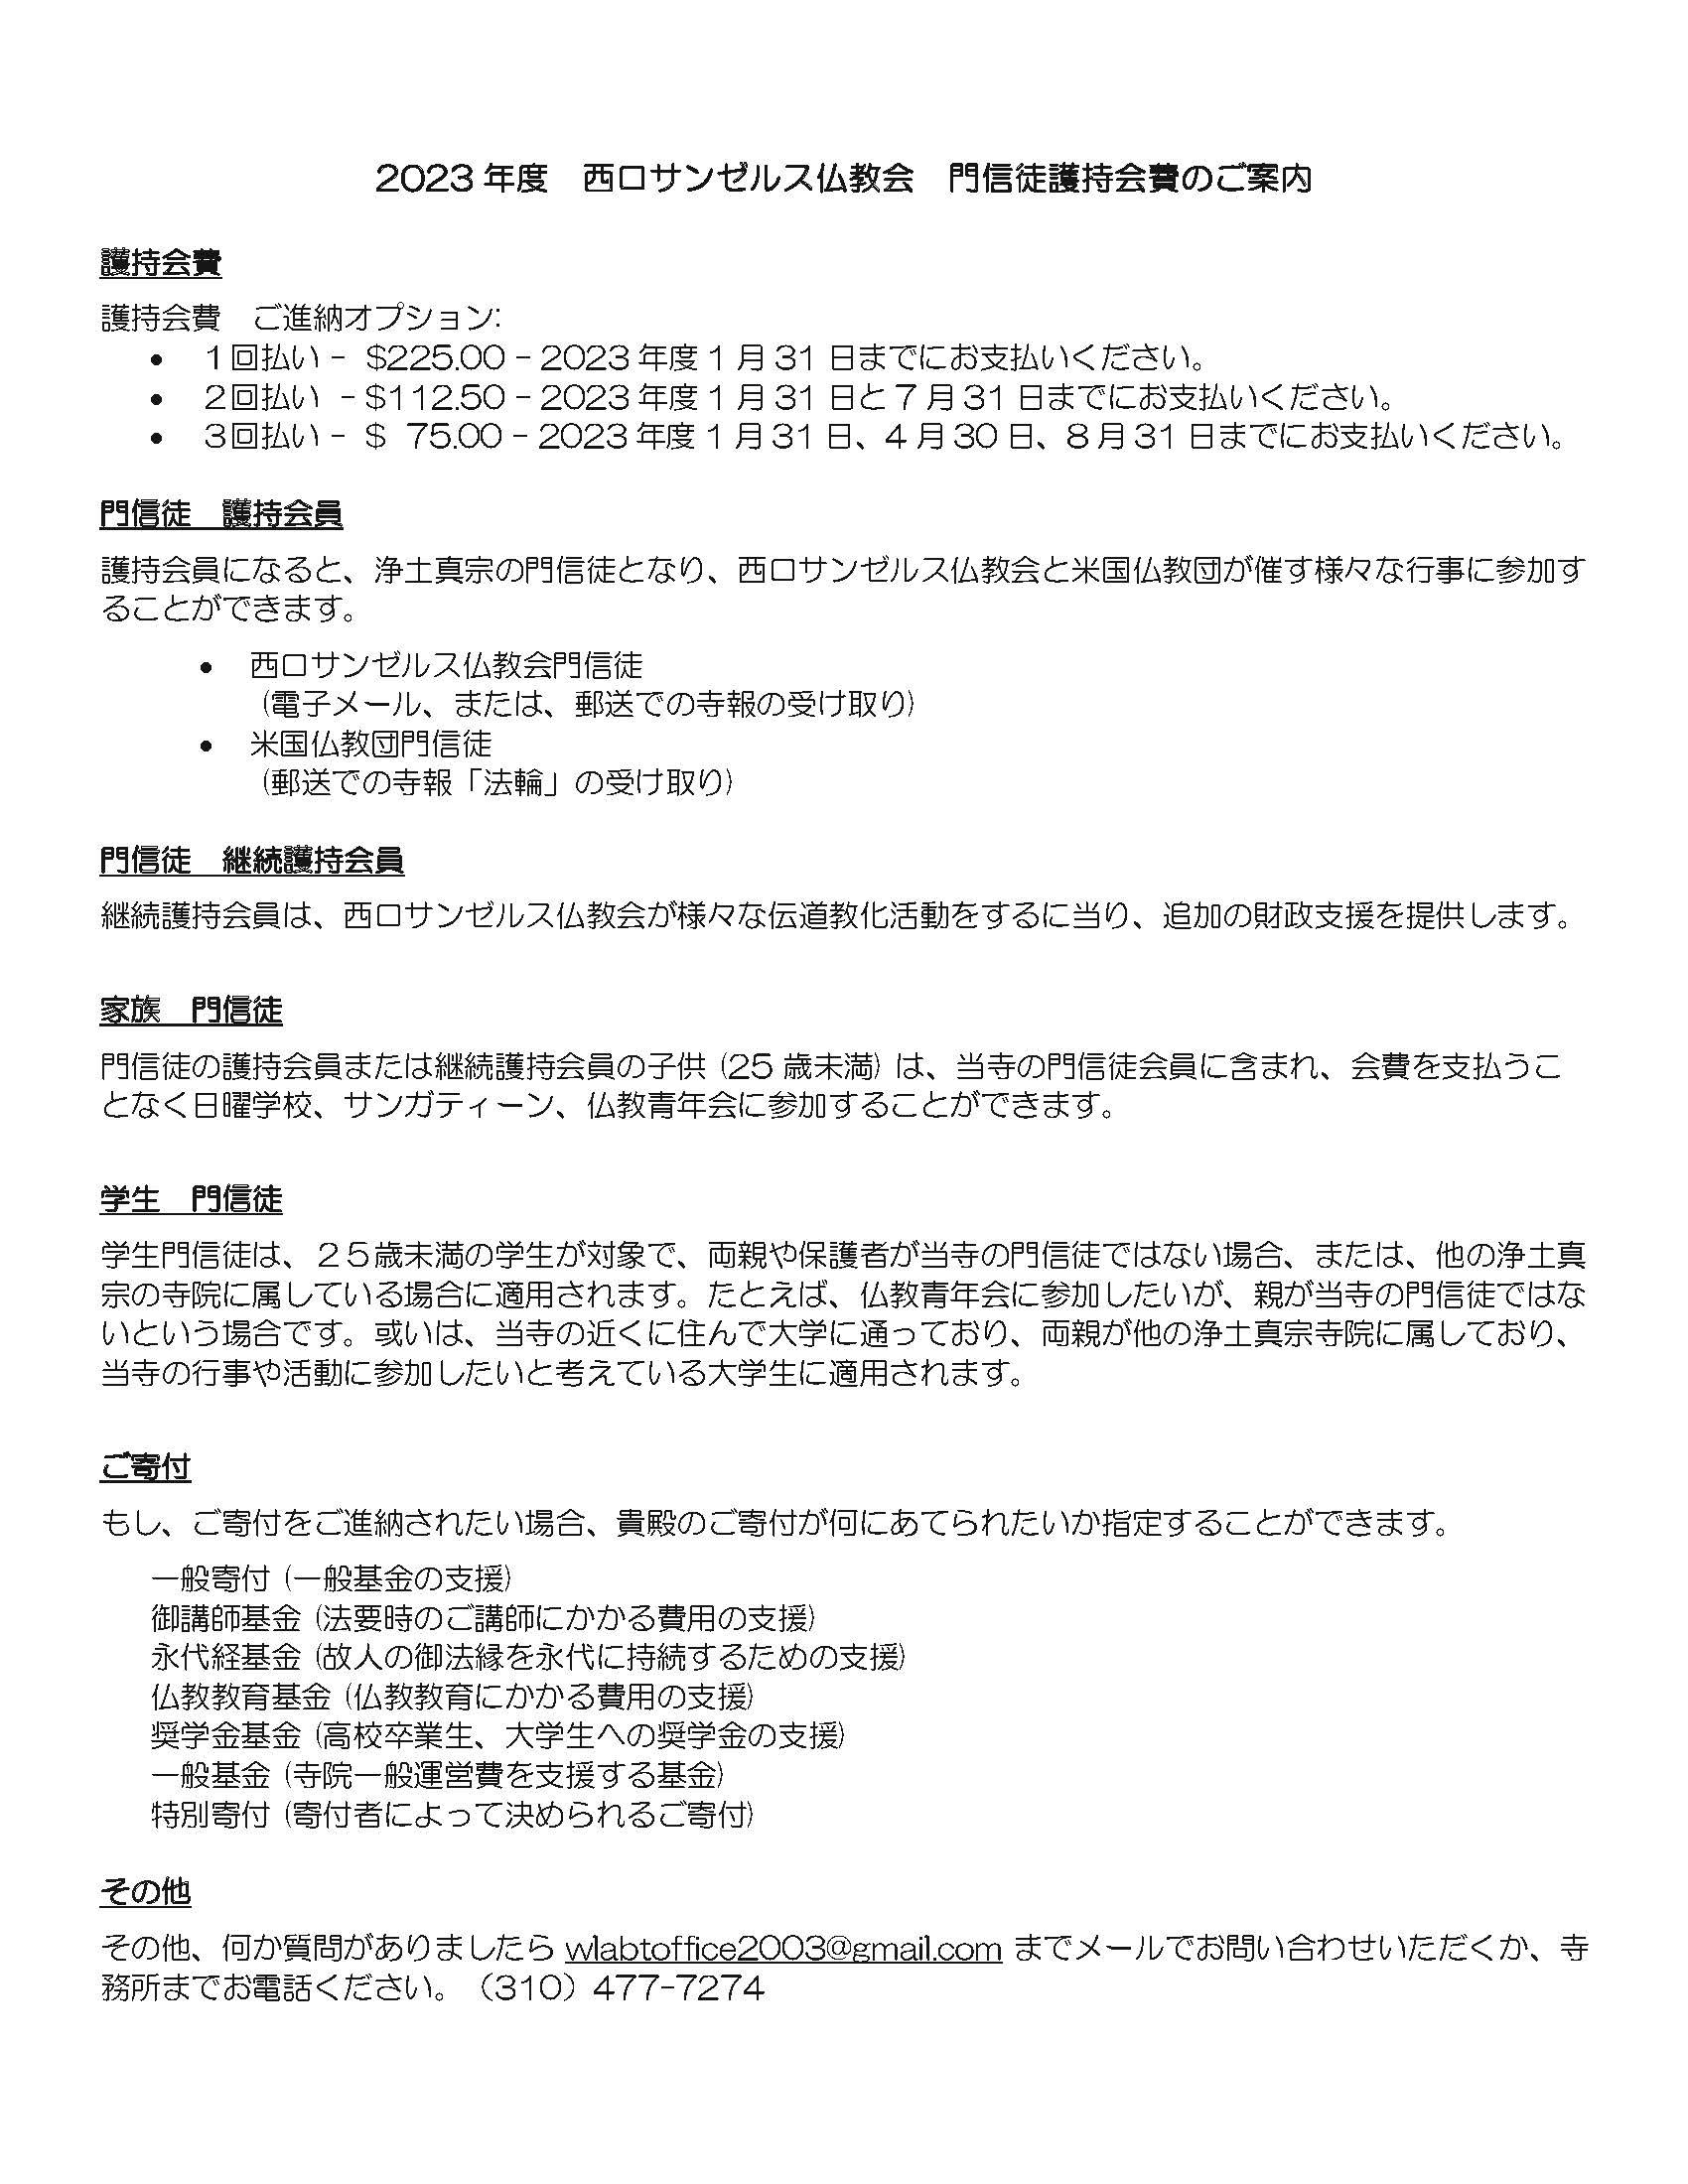 WLABT Japanese Bulletin_Mar-April_2023_FINAL_web_1 (J)_Page_18.jpg